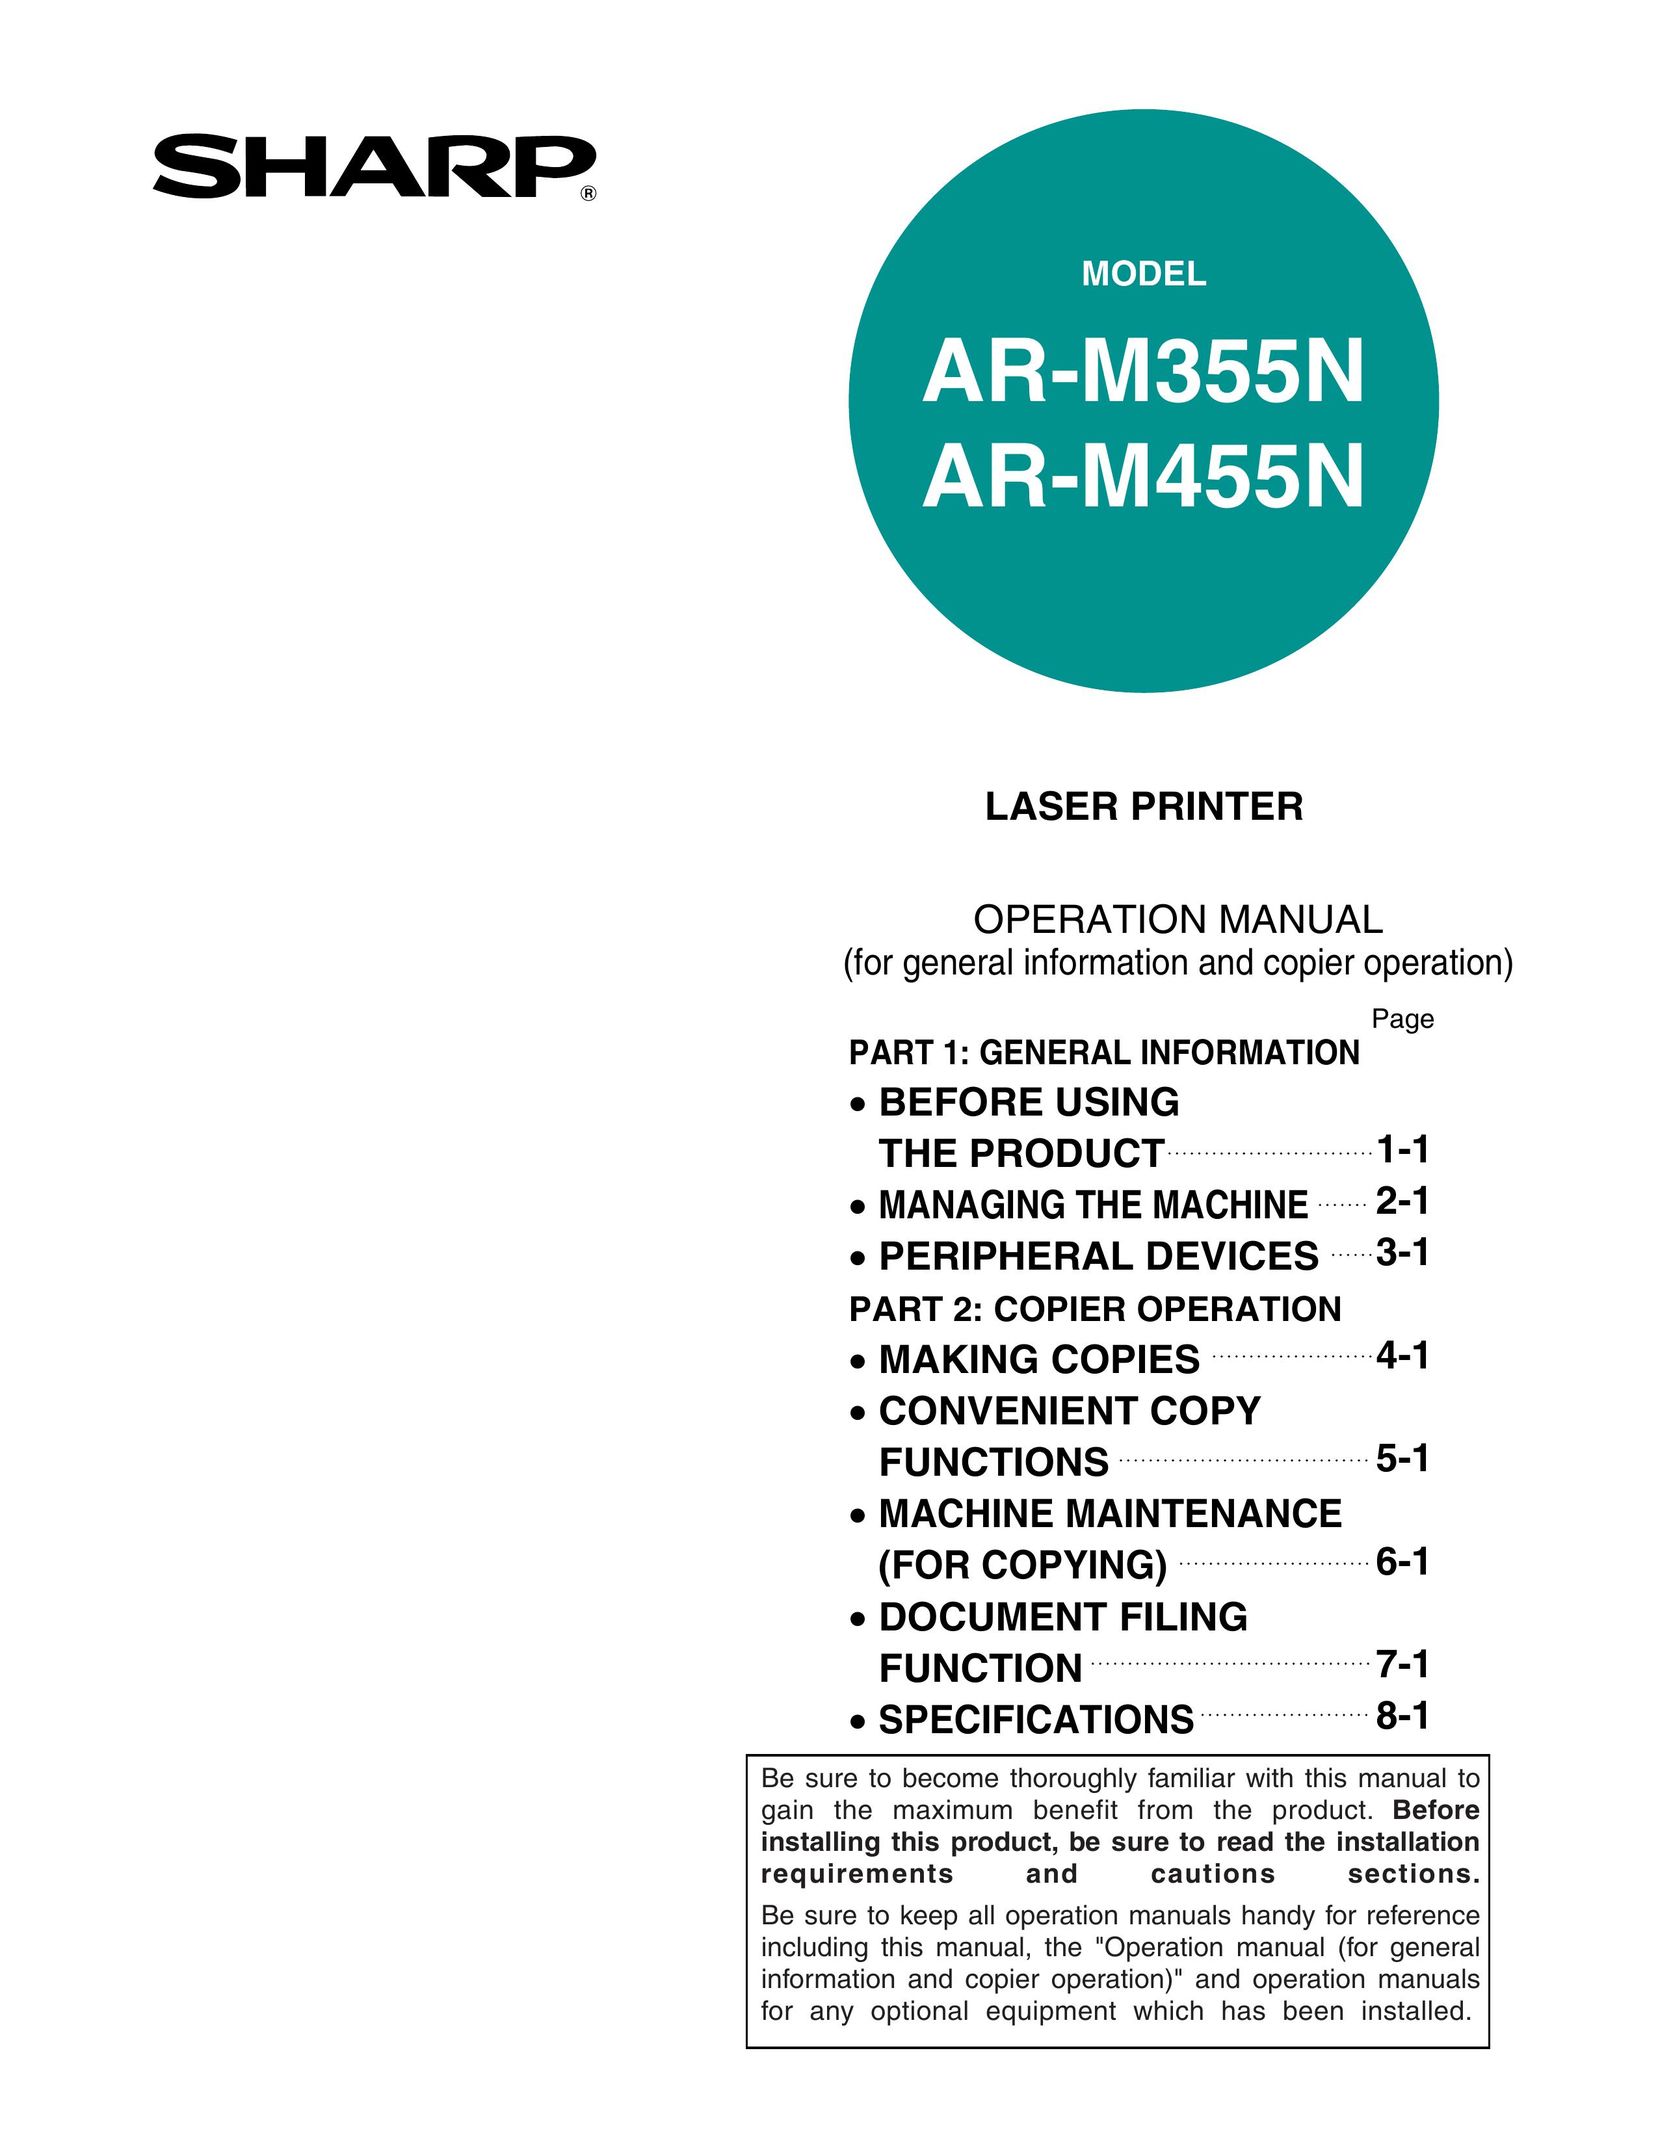 Sharp AR-M455N Printer User Manual